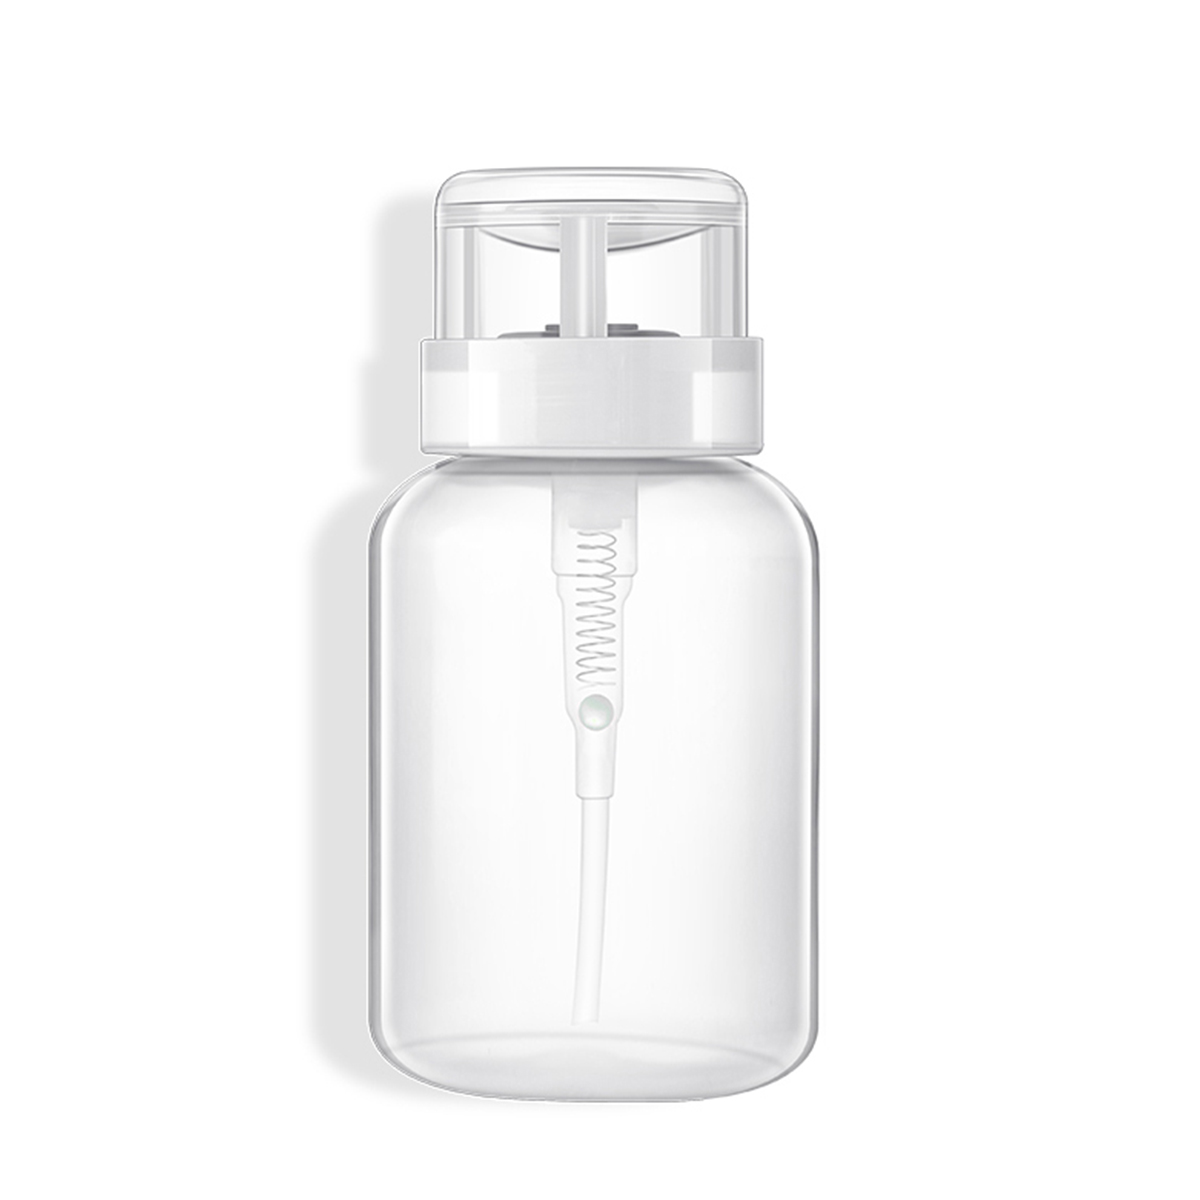 160ml-Press-Bottle-Pump-Dispenser-Atomizer-Spray-Bottles-Liquid-Holder-Refillable-Bottles-1608331-5